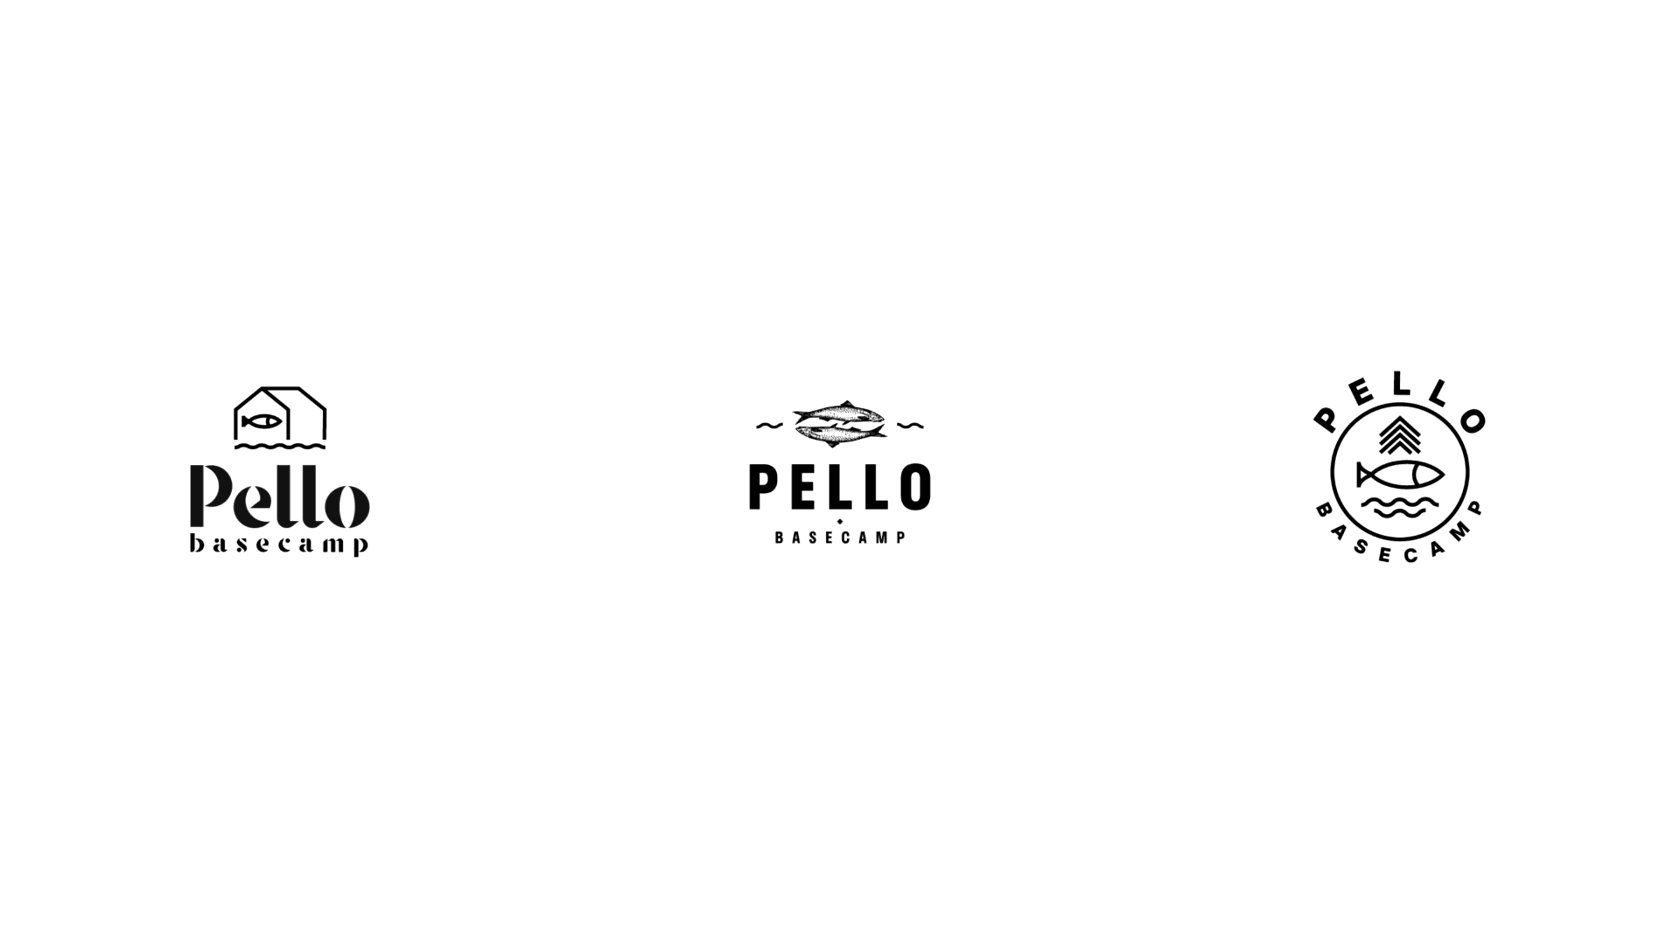 Pello Basecamp logo design first variant Sketches